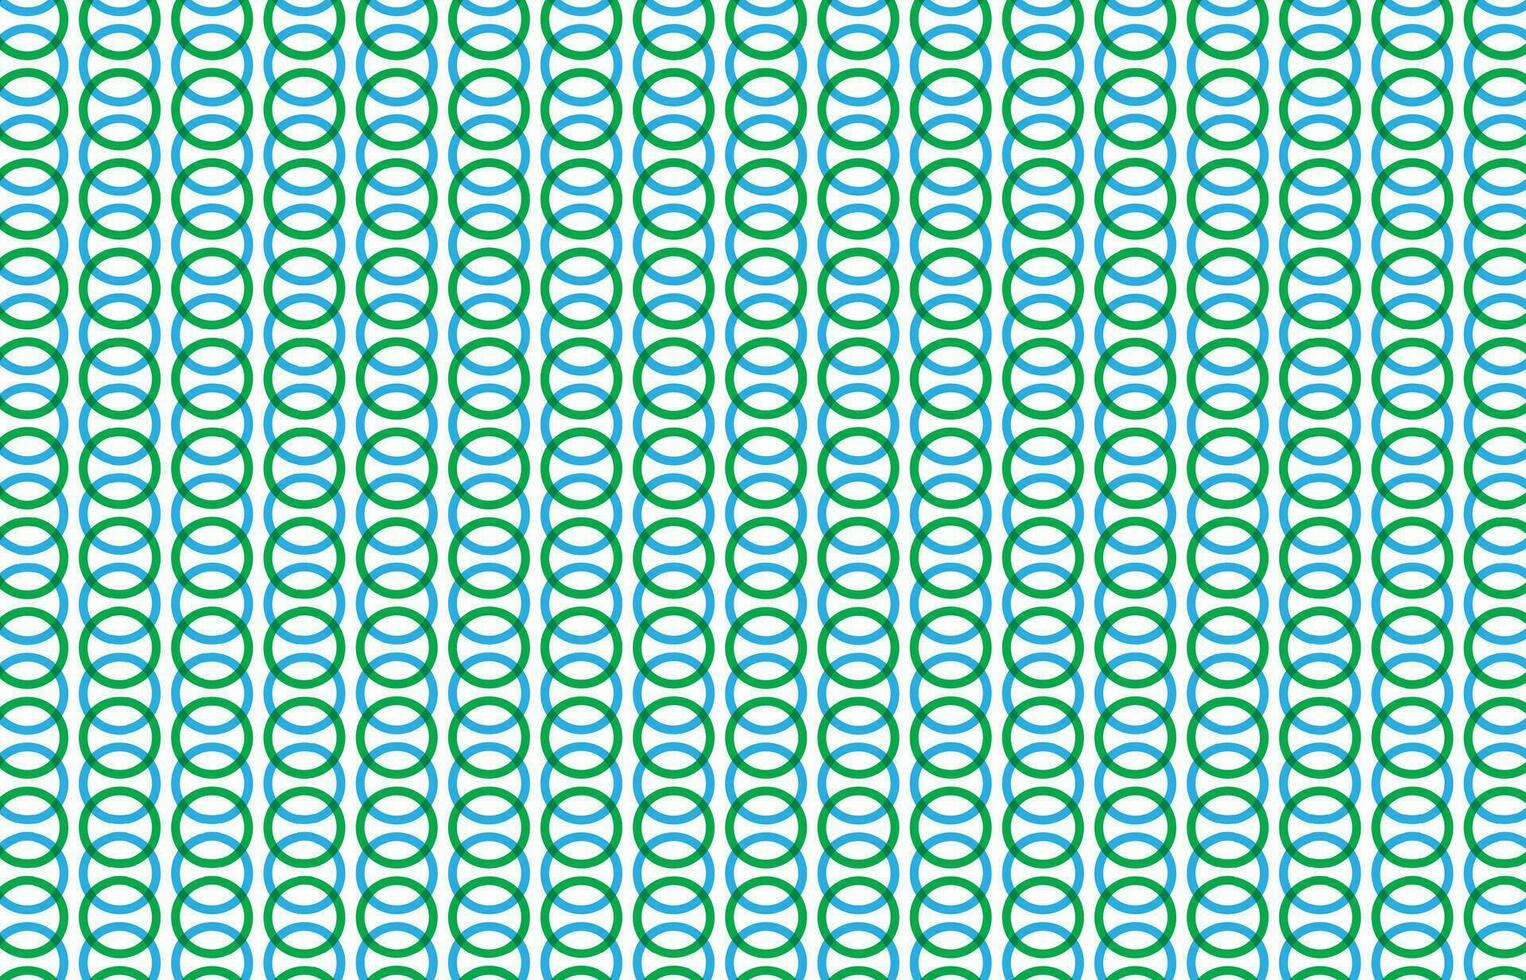 Kreis Muster abstrakt Hintergrund vektor